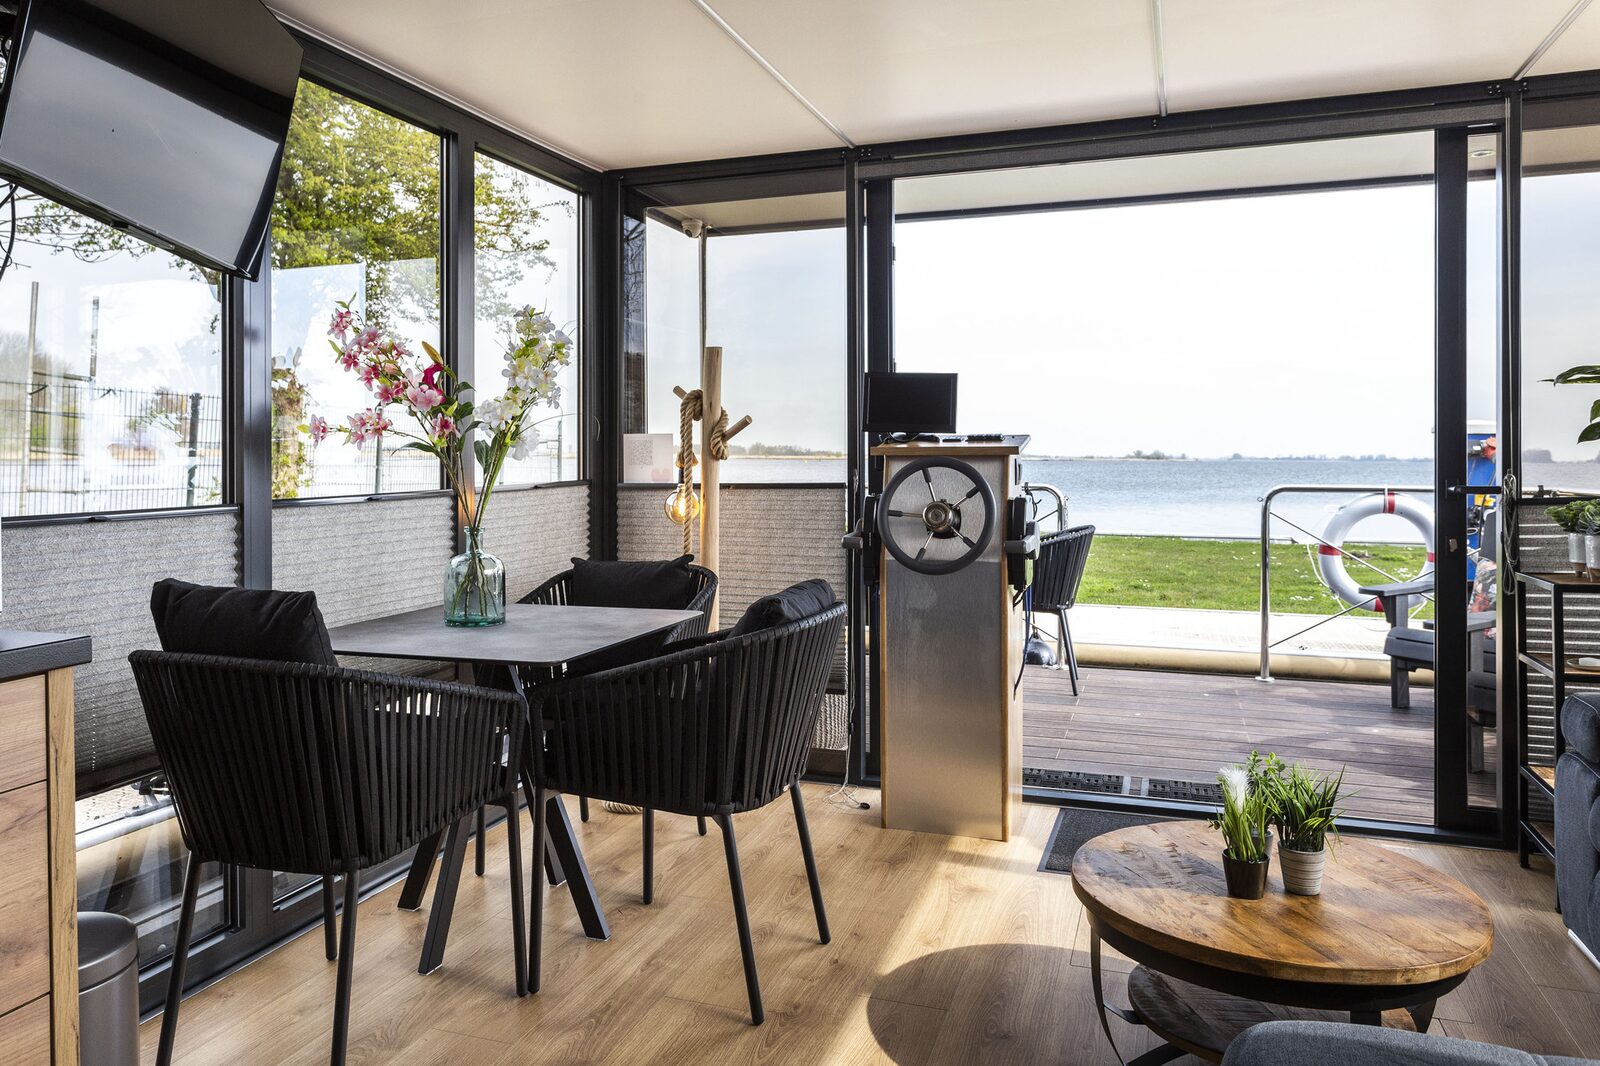 Houseboat 'Iere Fügel' met tuin en 2 SUP's - Paviljoenwei 4 | Offingawier